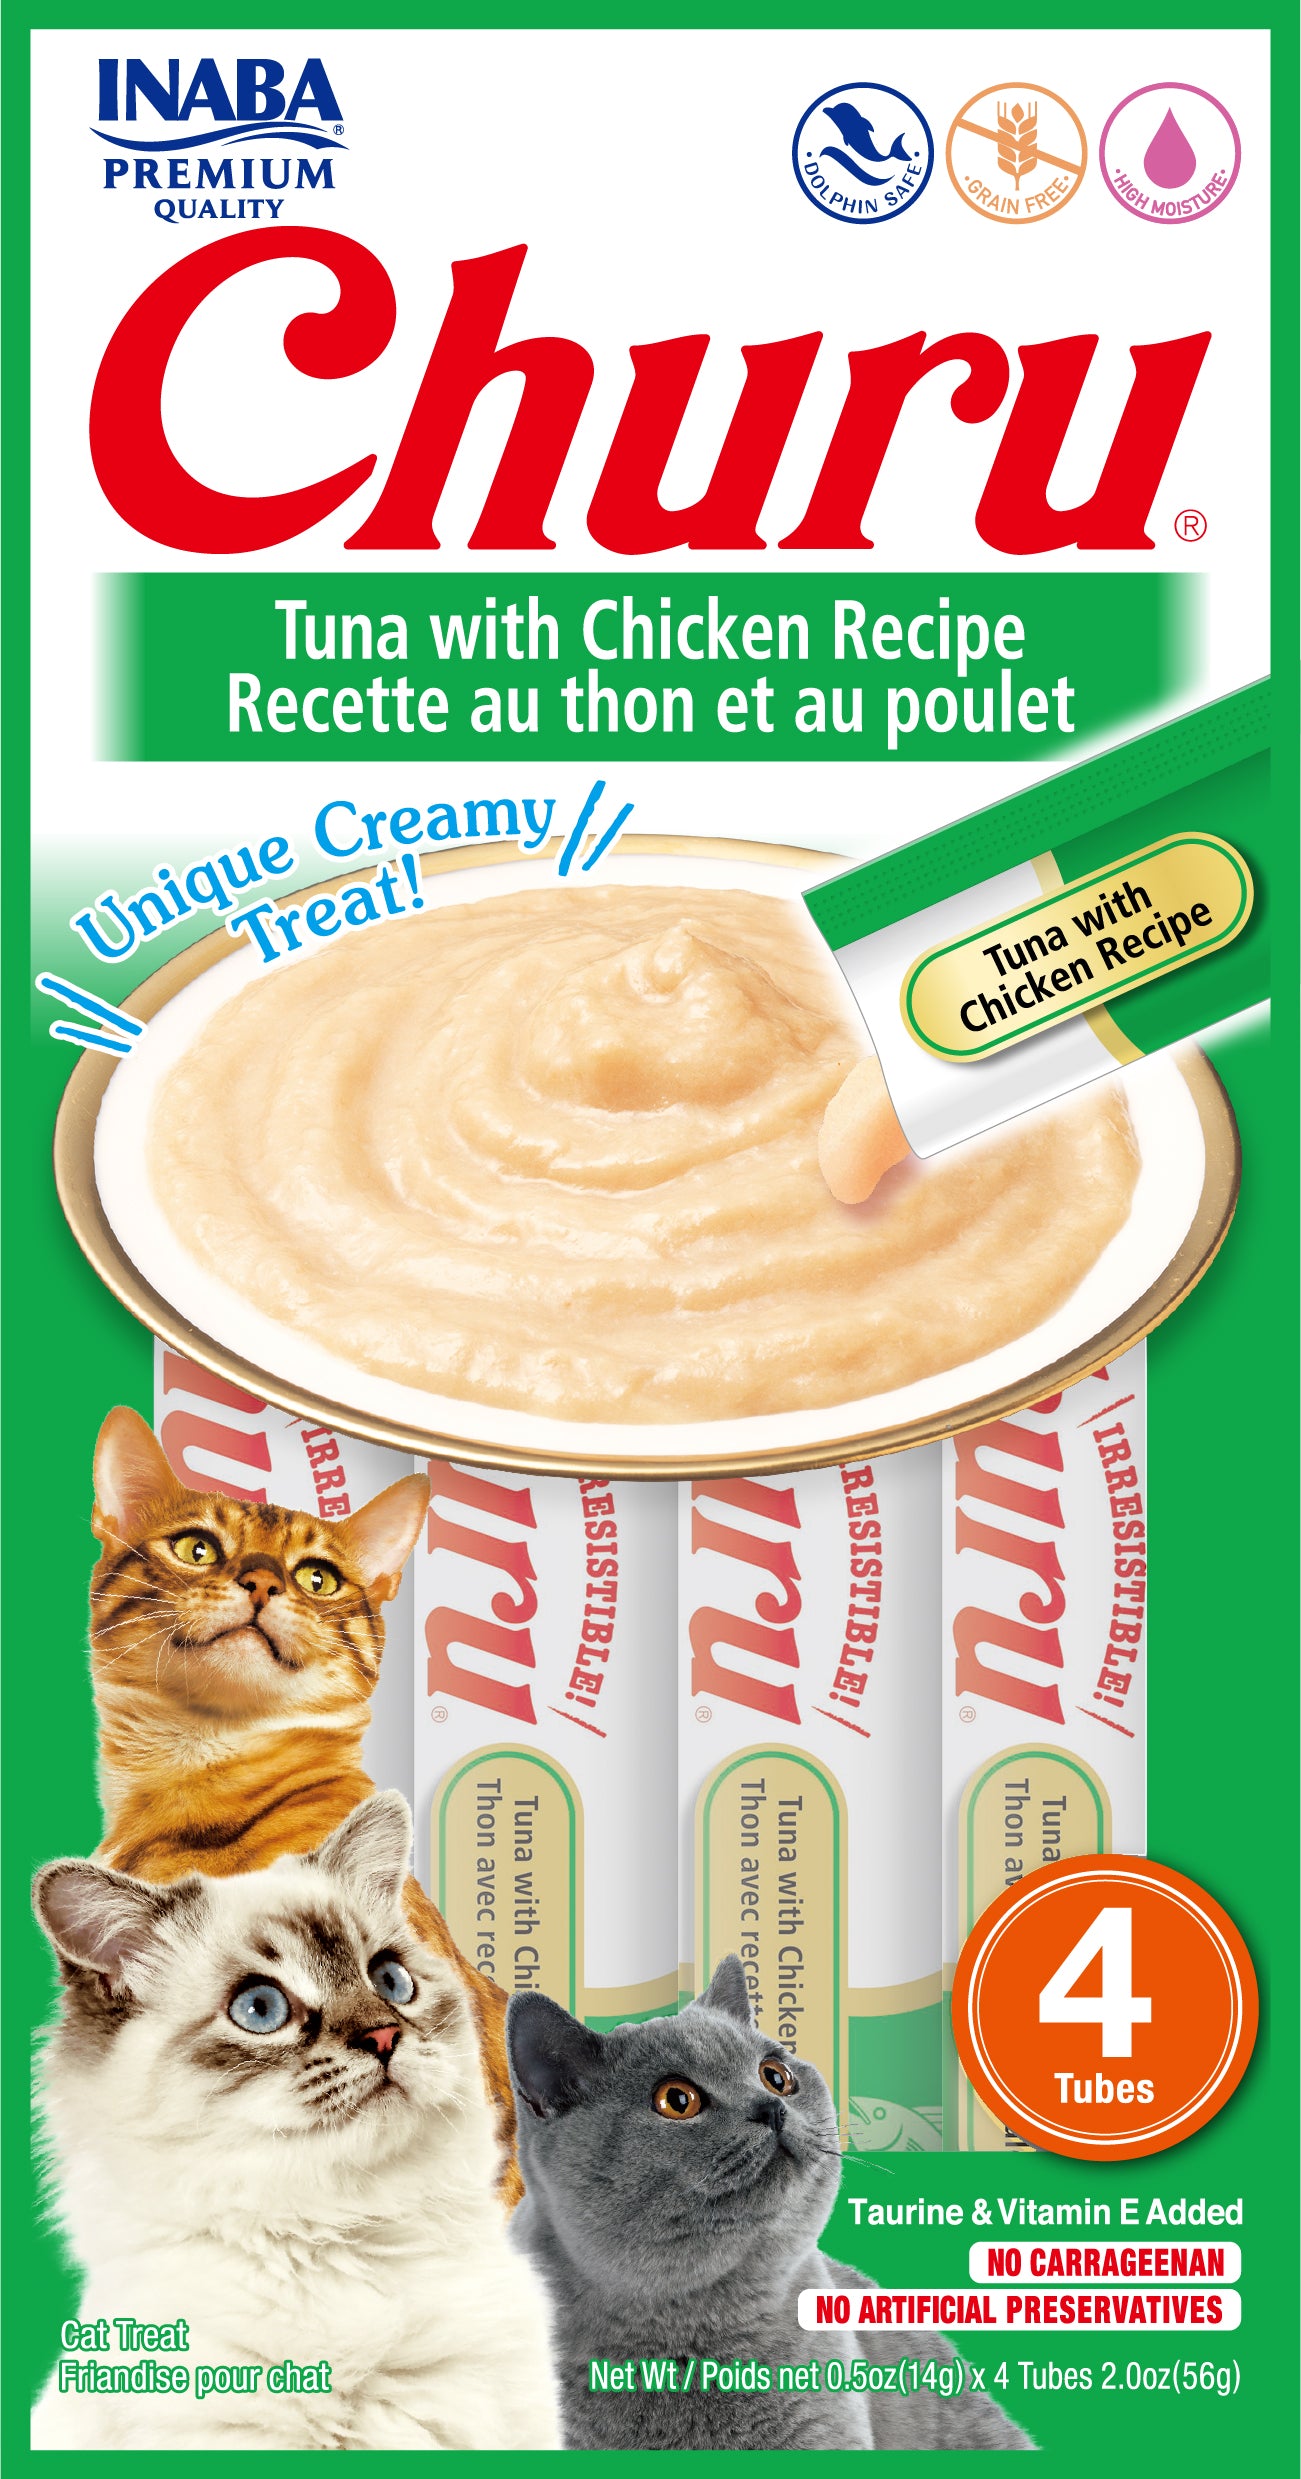 Inaba Churu Creamy Tuna With Chicken Recipe Grain Free Treat For Cat 14g x 4 Tubes